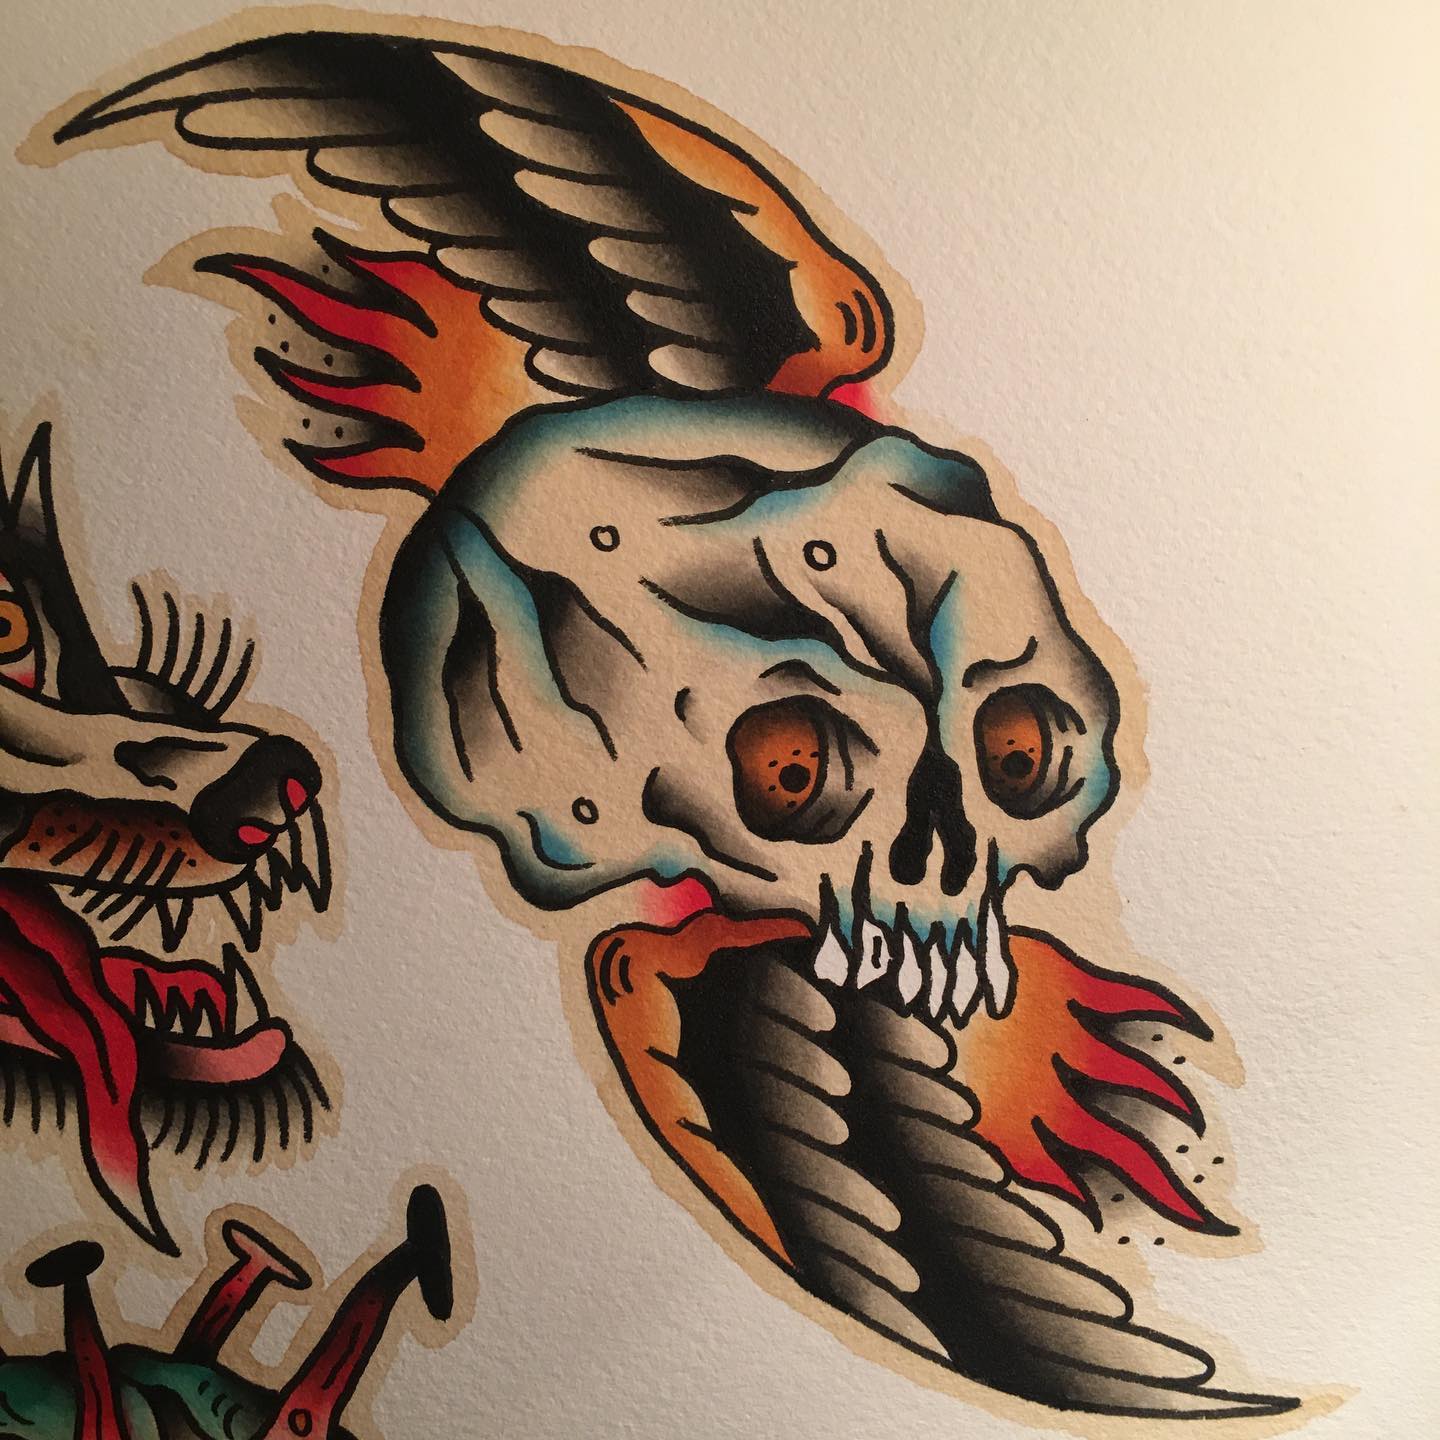 SKULL/WINGS...
#skull #skulltattoo #watercolor #watercolour #watercolorpainting